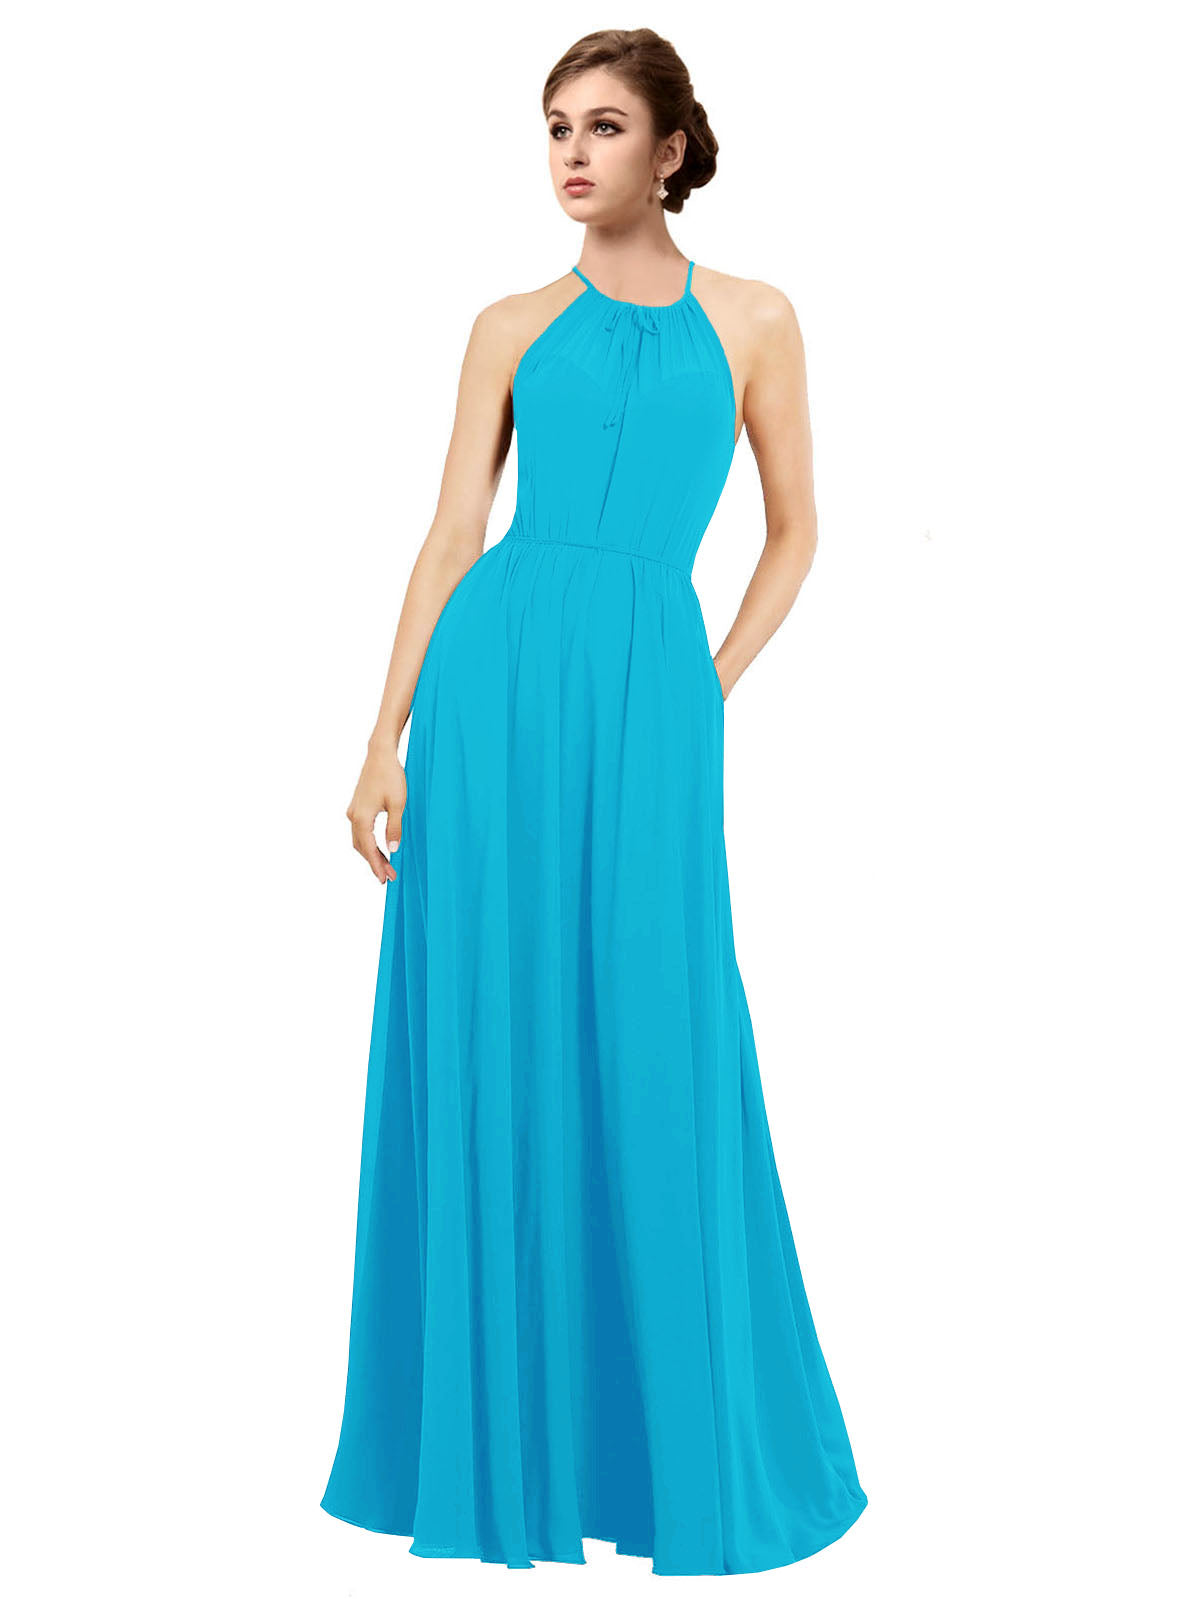 Turquoise A-Line Halter Sleeveless Long Bridesmaid Dress Taylor